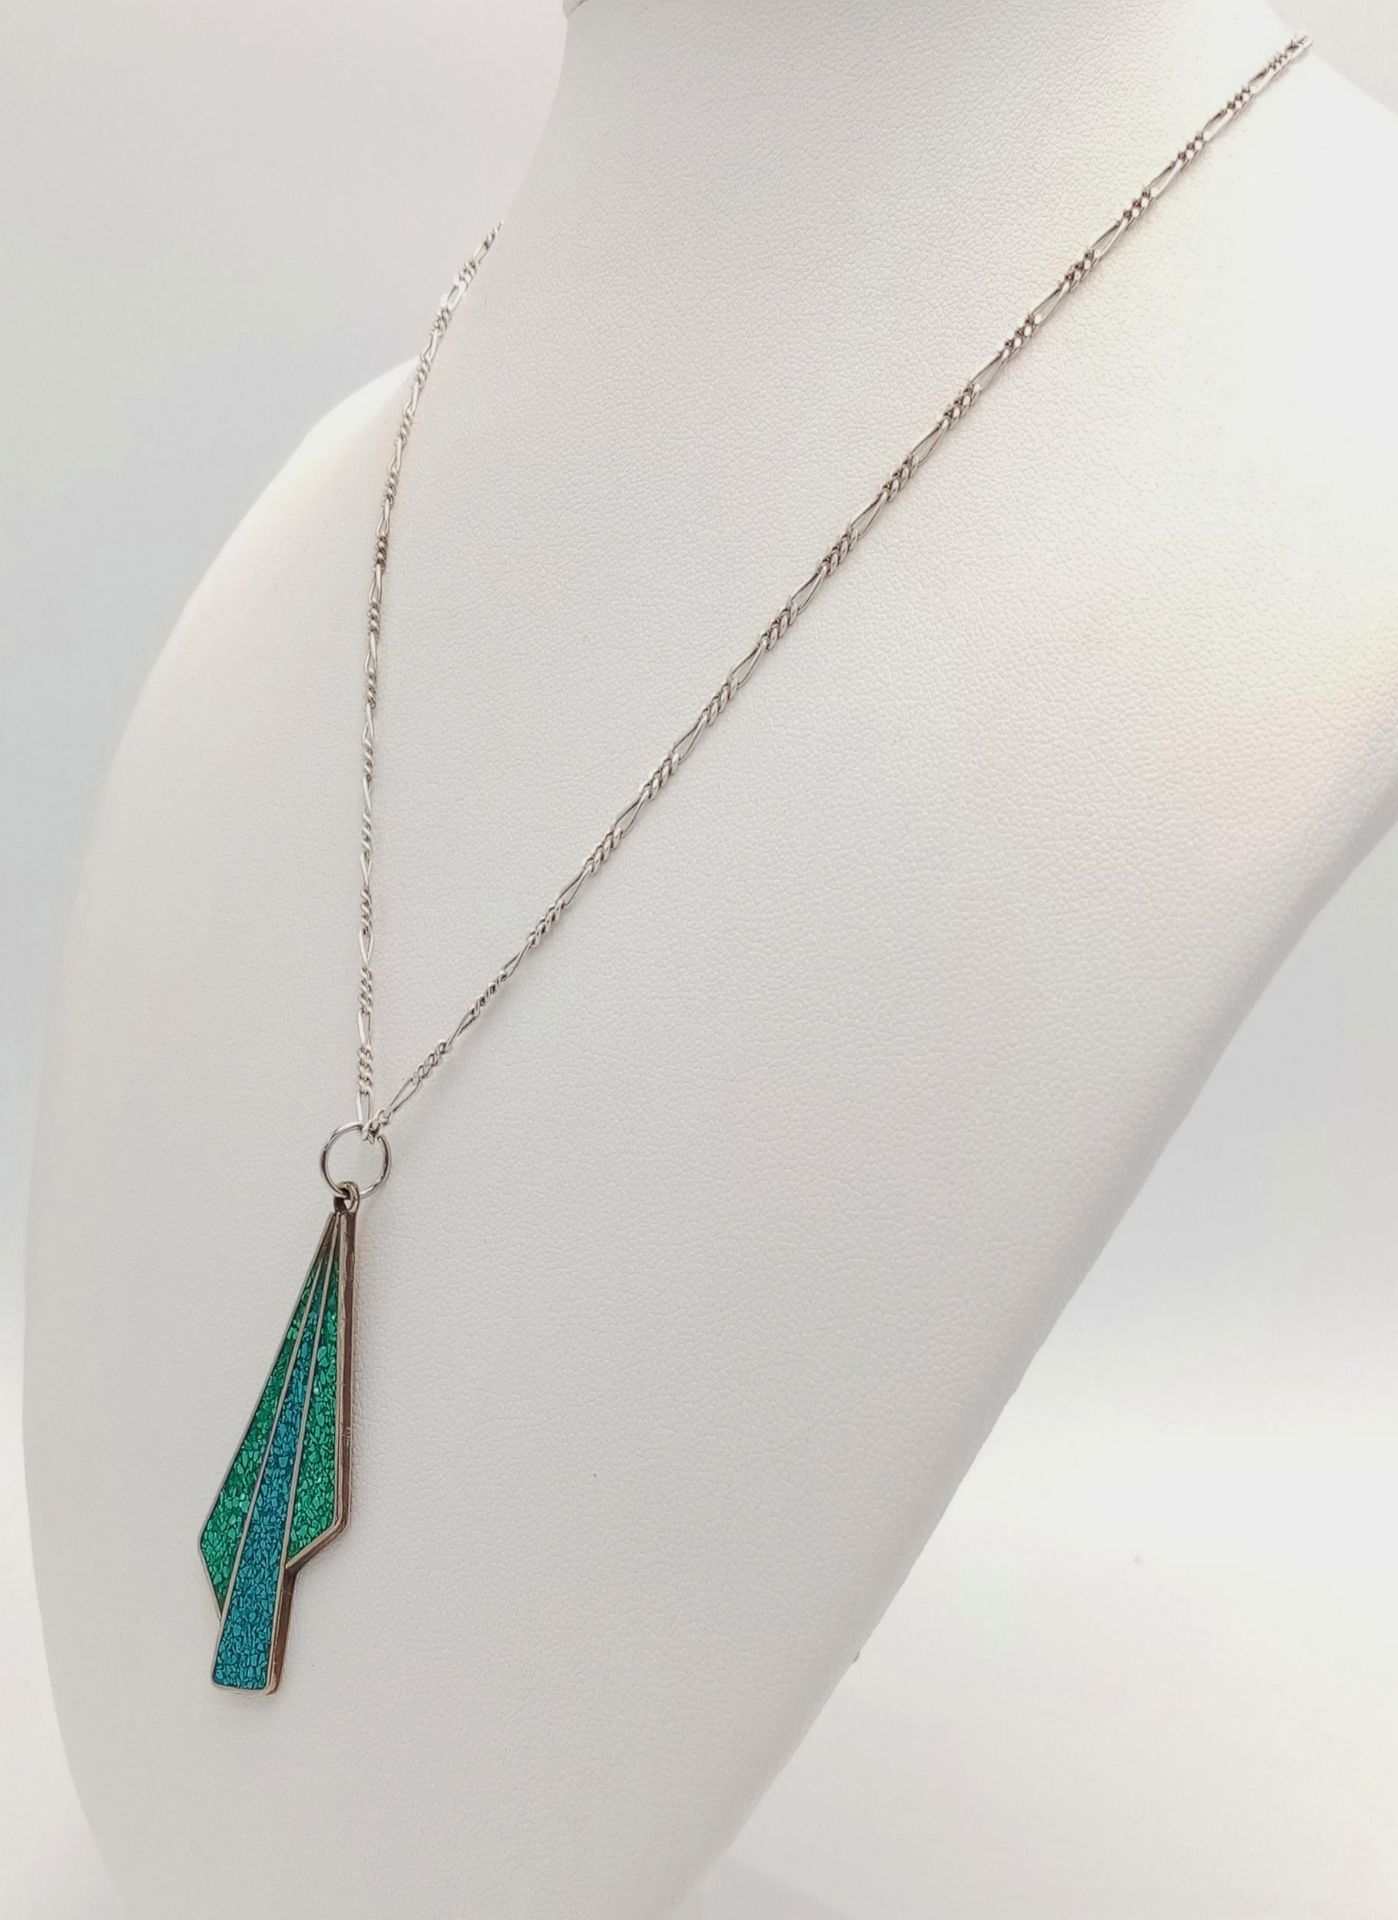 A Vintage Alpaca Turquoise Set Sterling Silver Necklace. 40cm Length. Pendant Measures 5cm Length. - Image 2 of 6